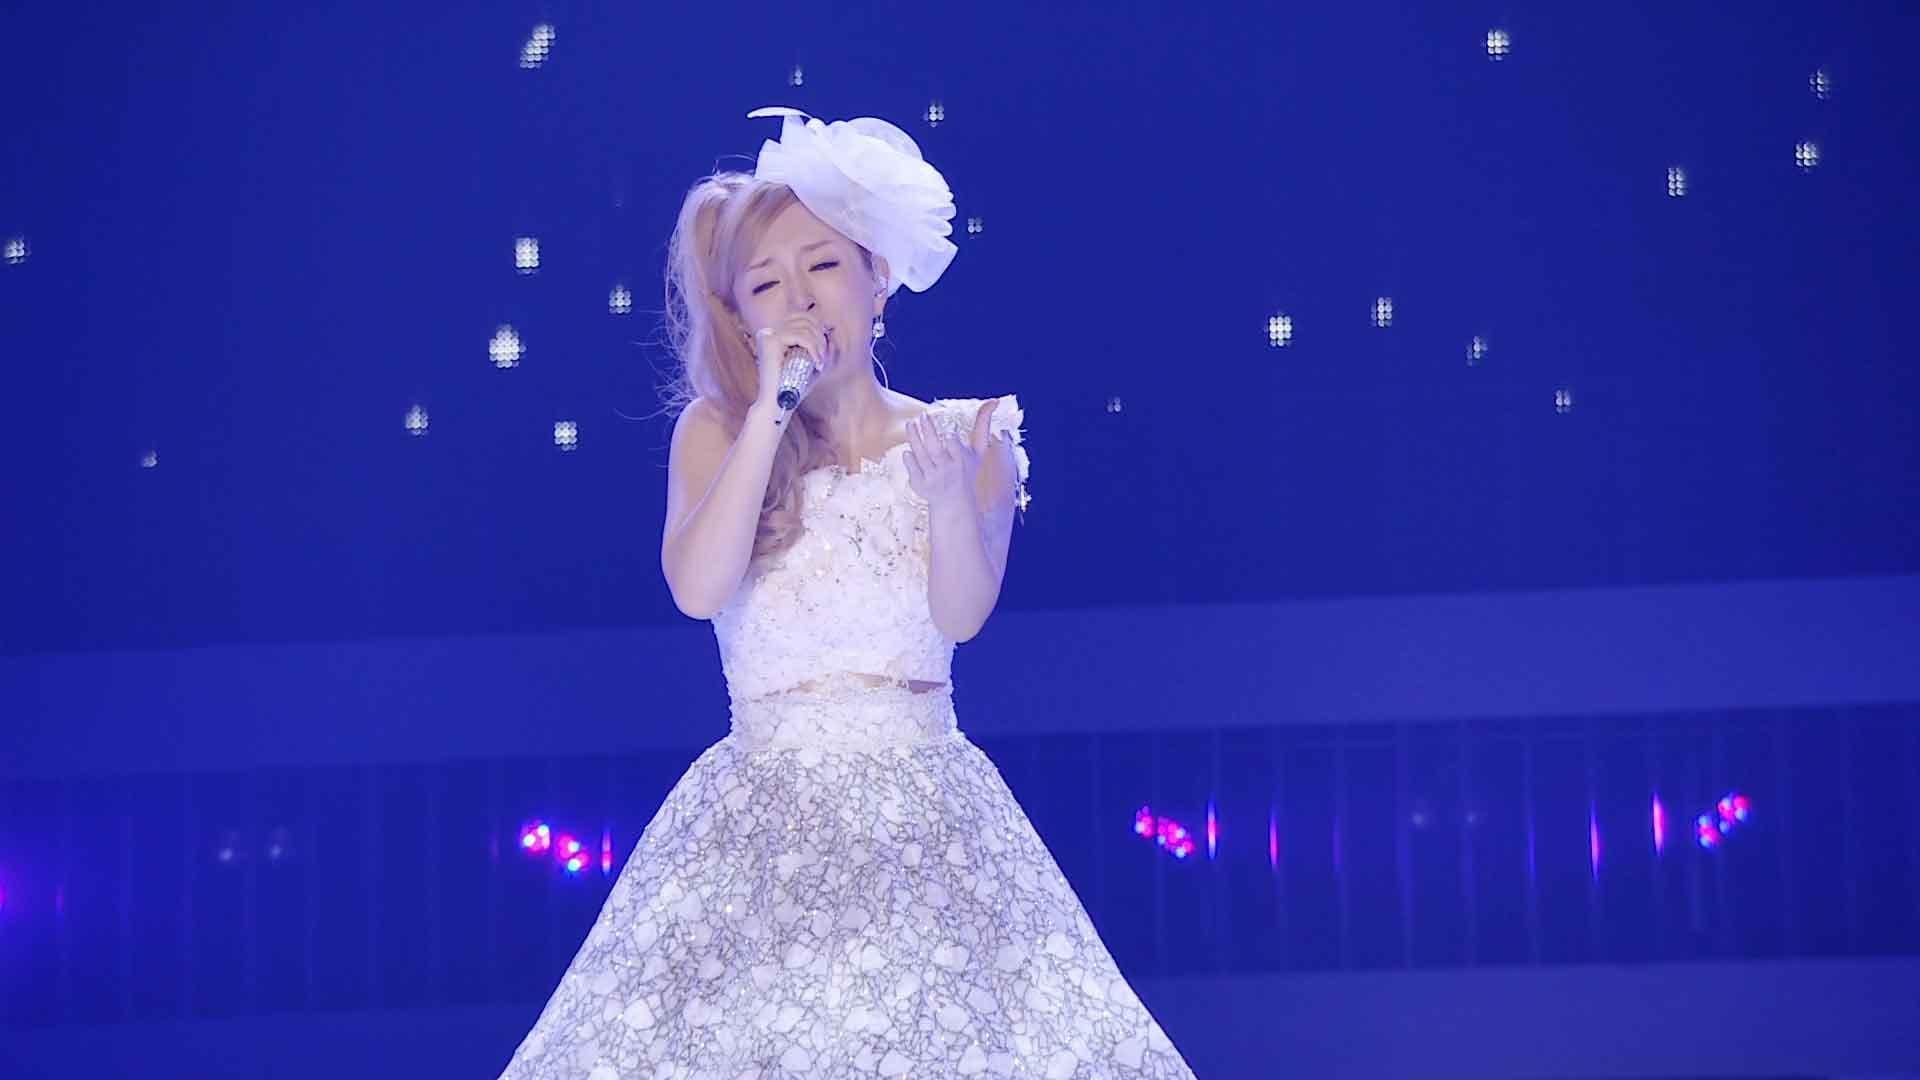 Ayumi Hamasaki - Countdown Live 2013-2014 A backdrop